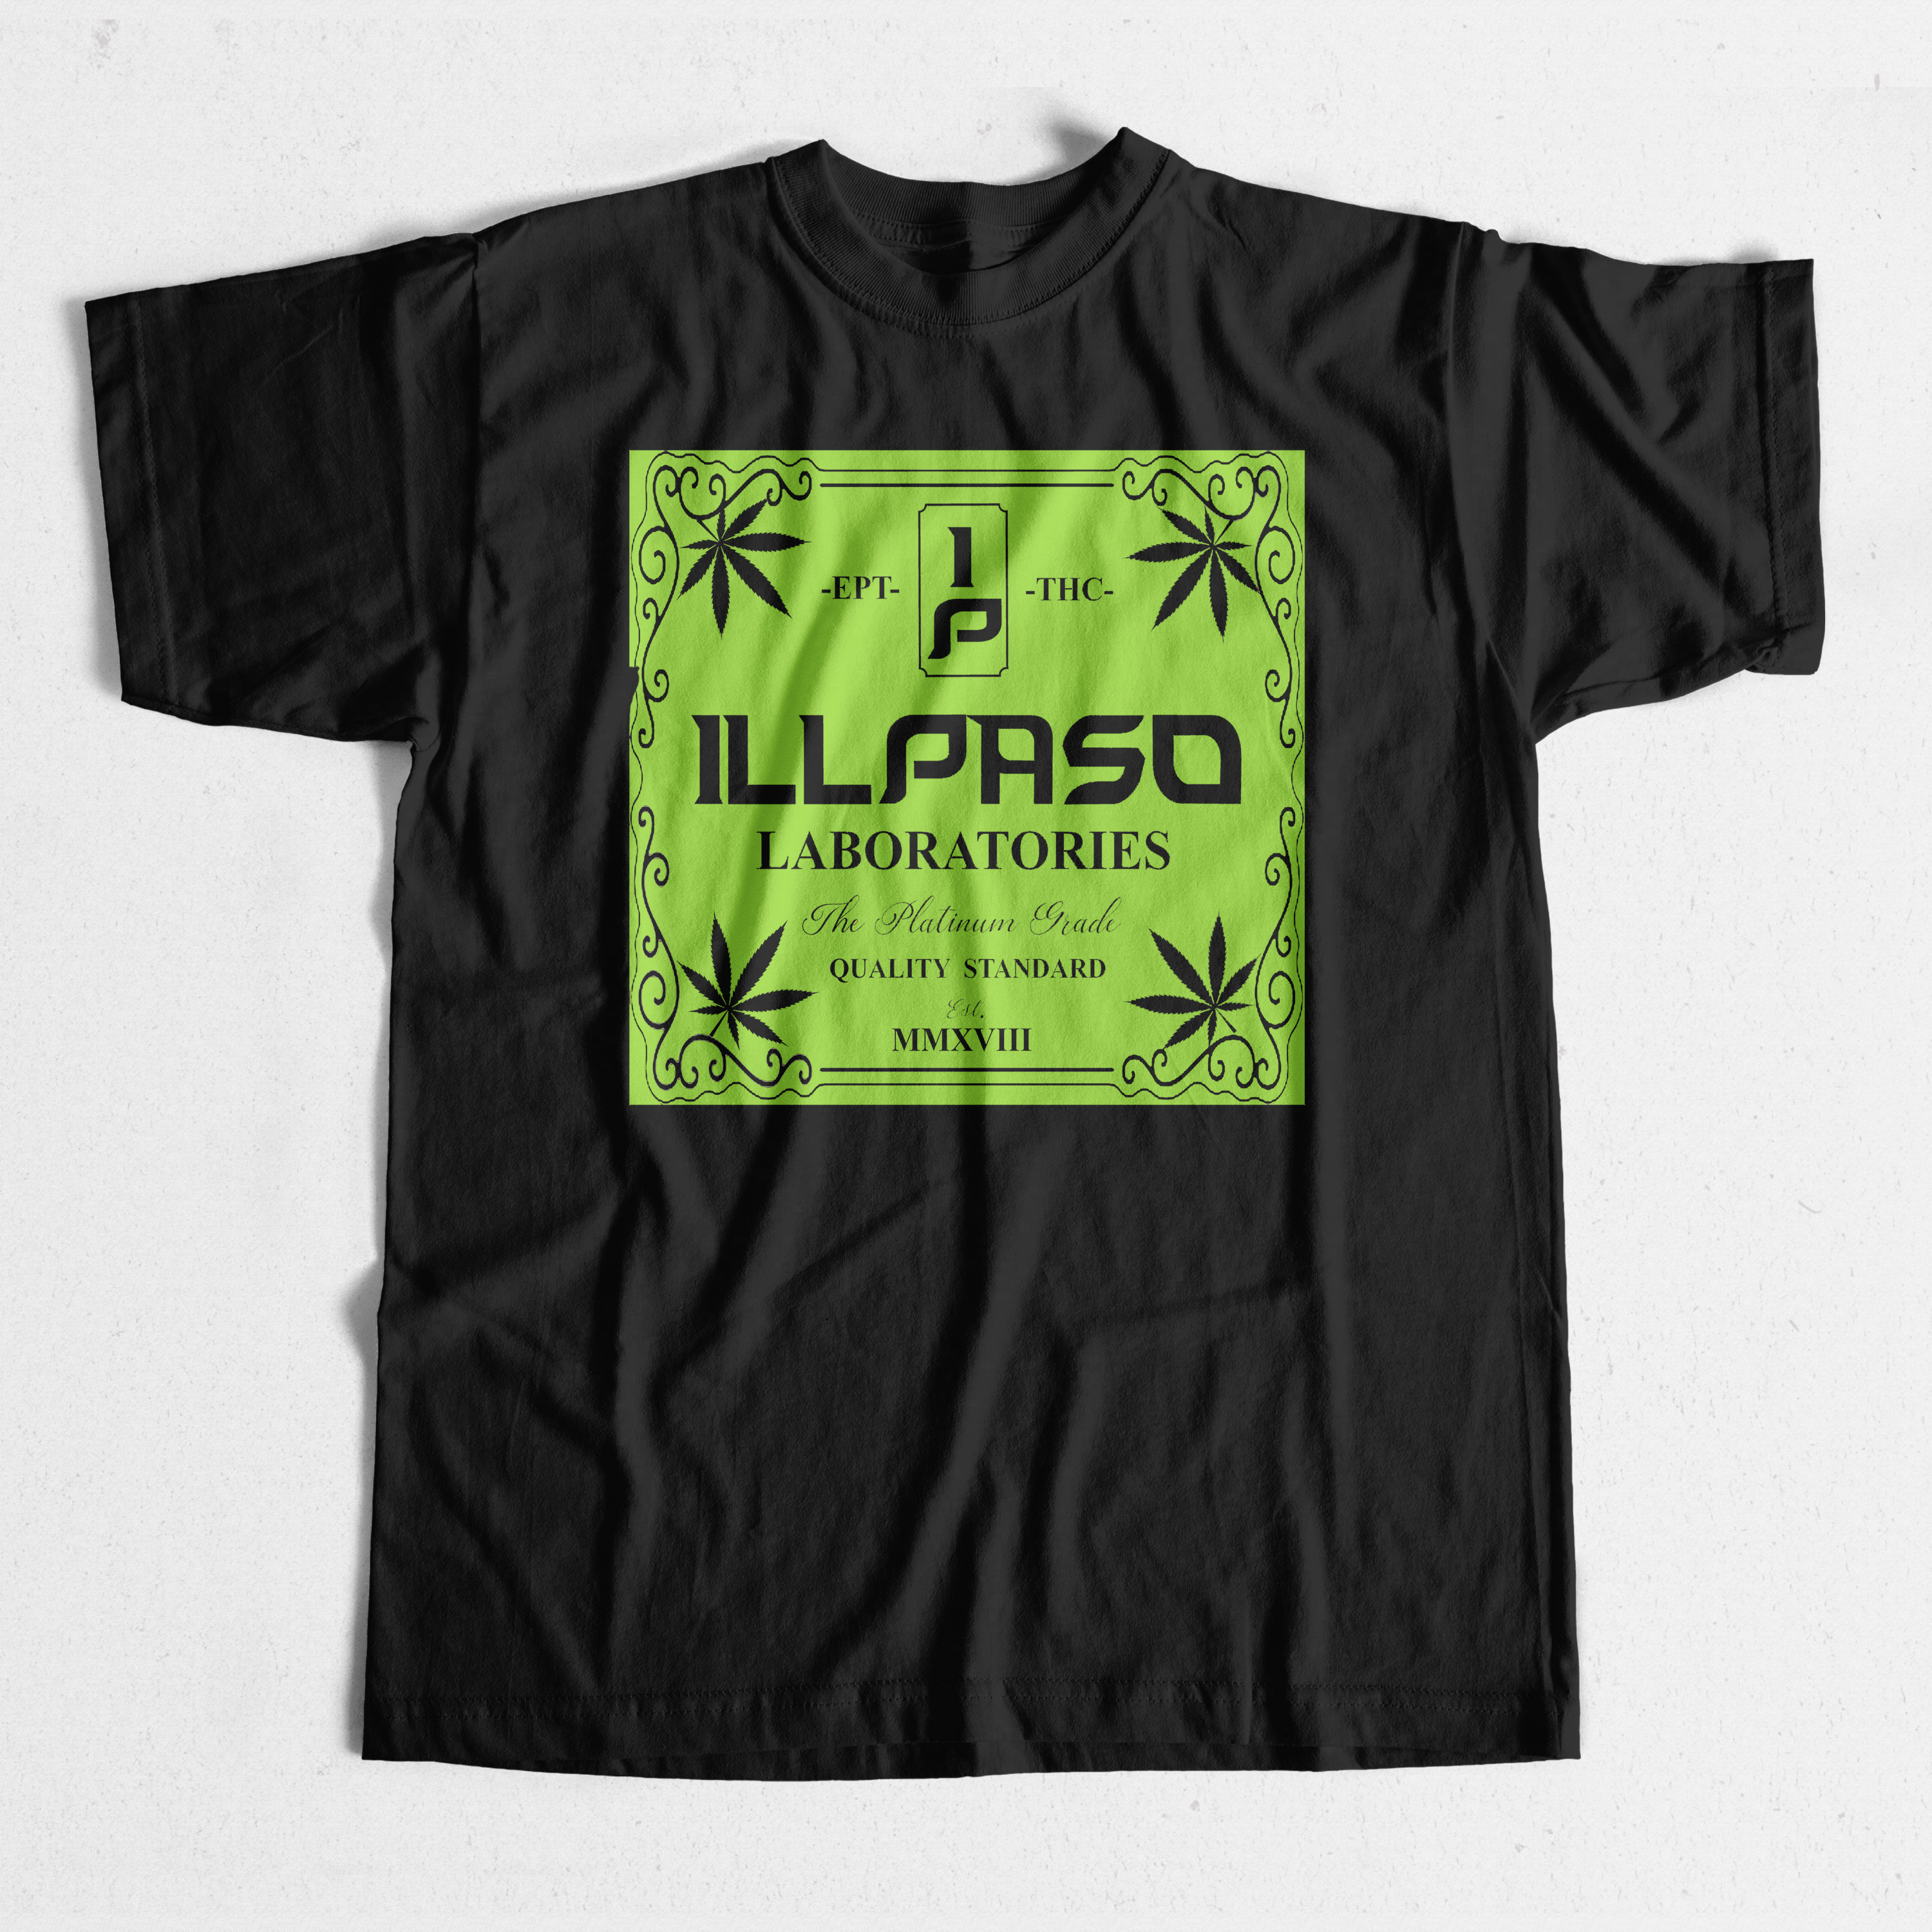 "illpaso Laboratories" Men's T-shirt (Black) by Lobesmatic